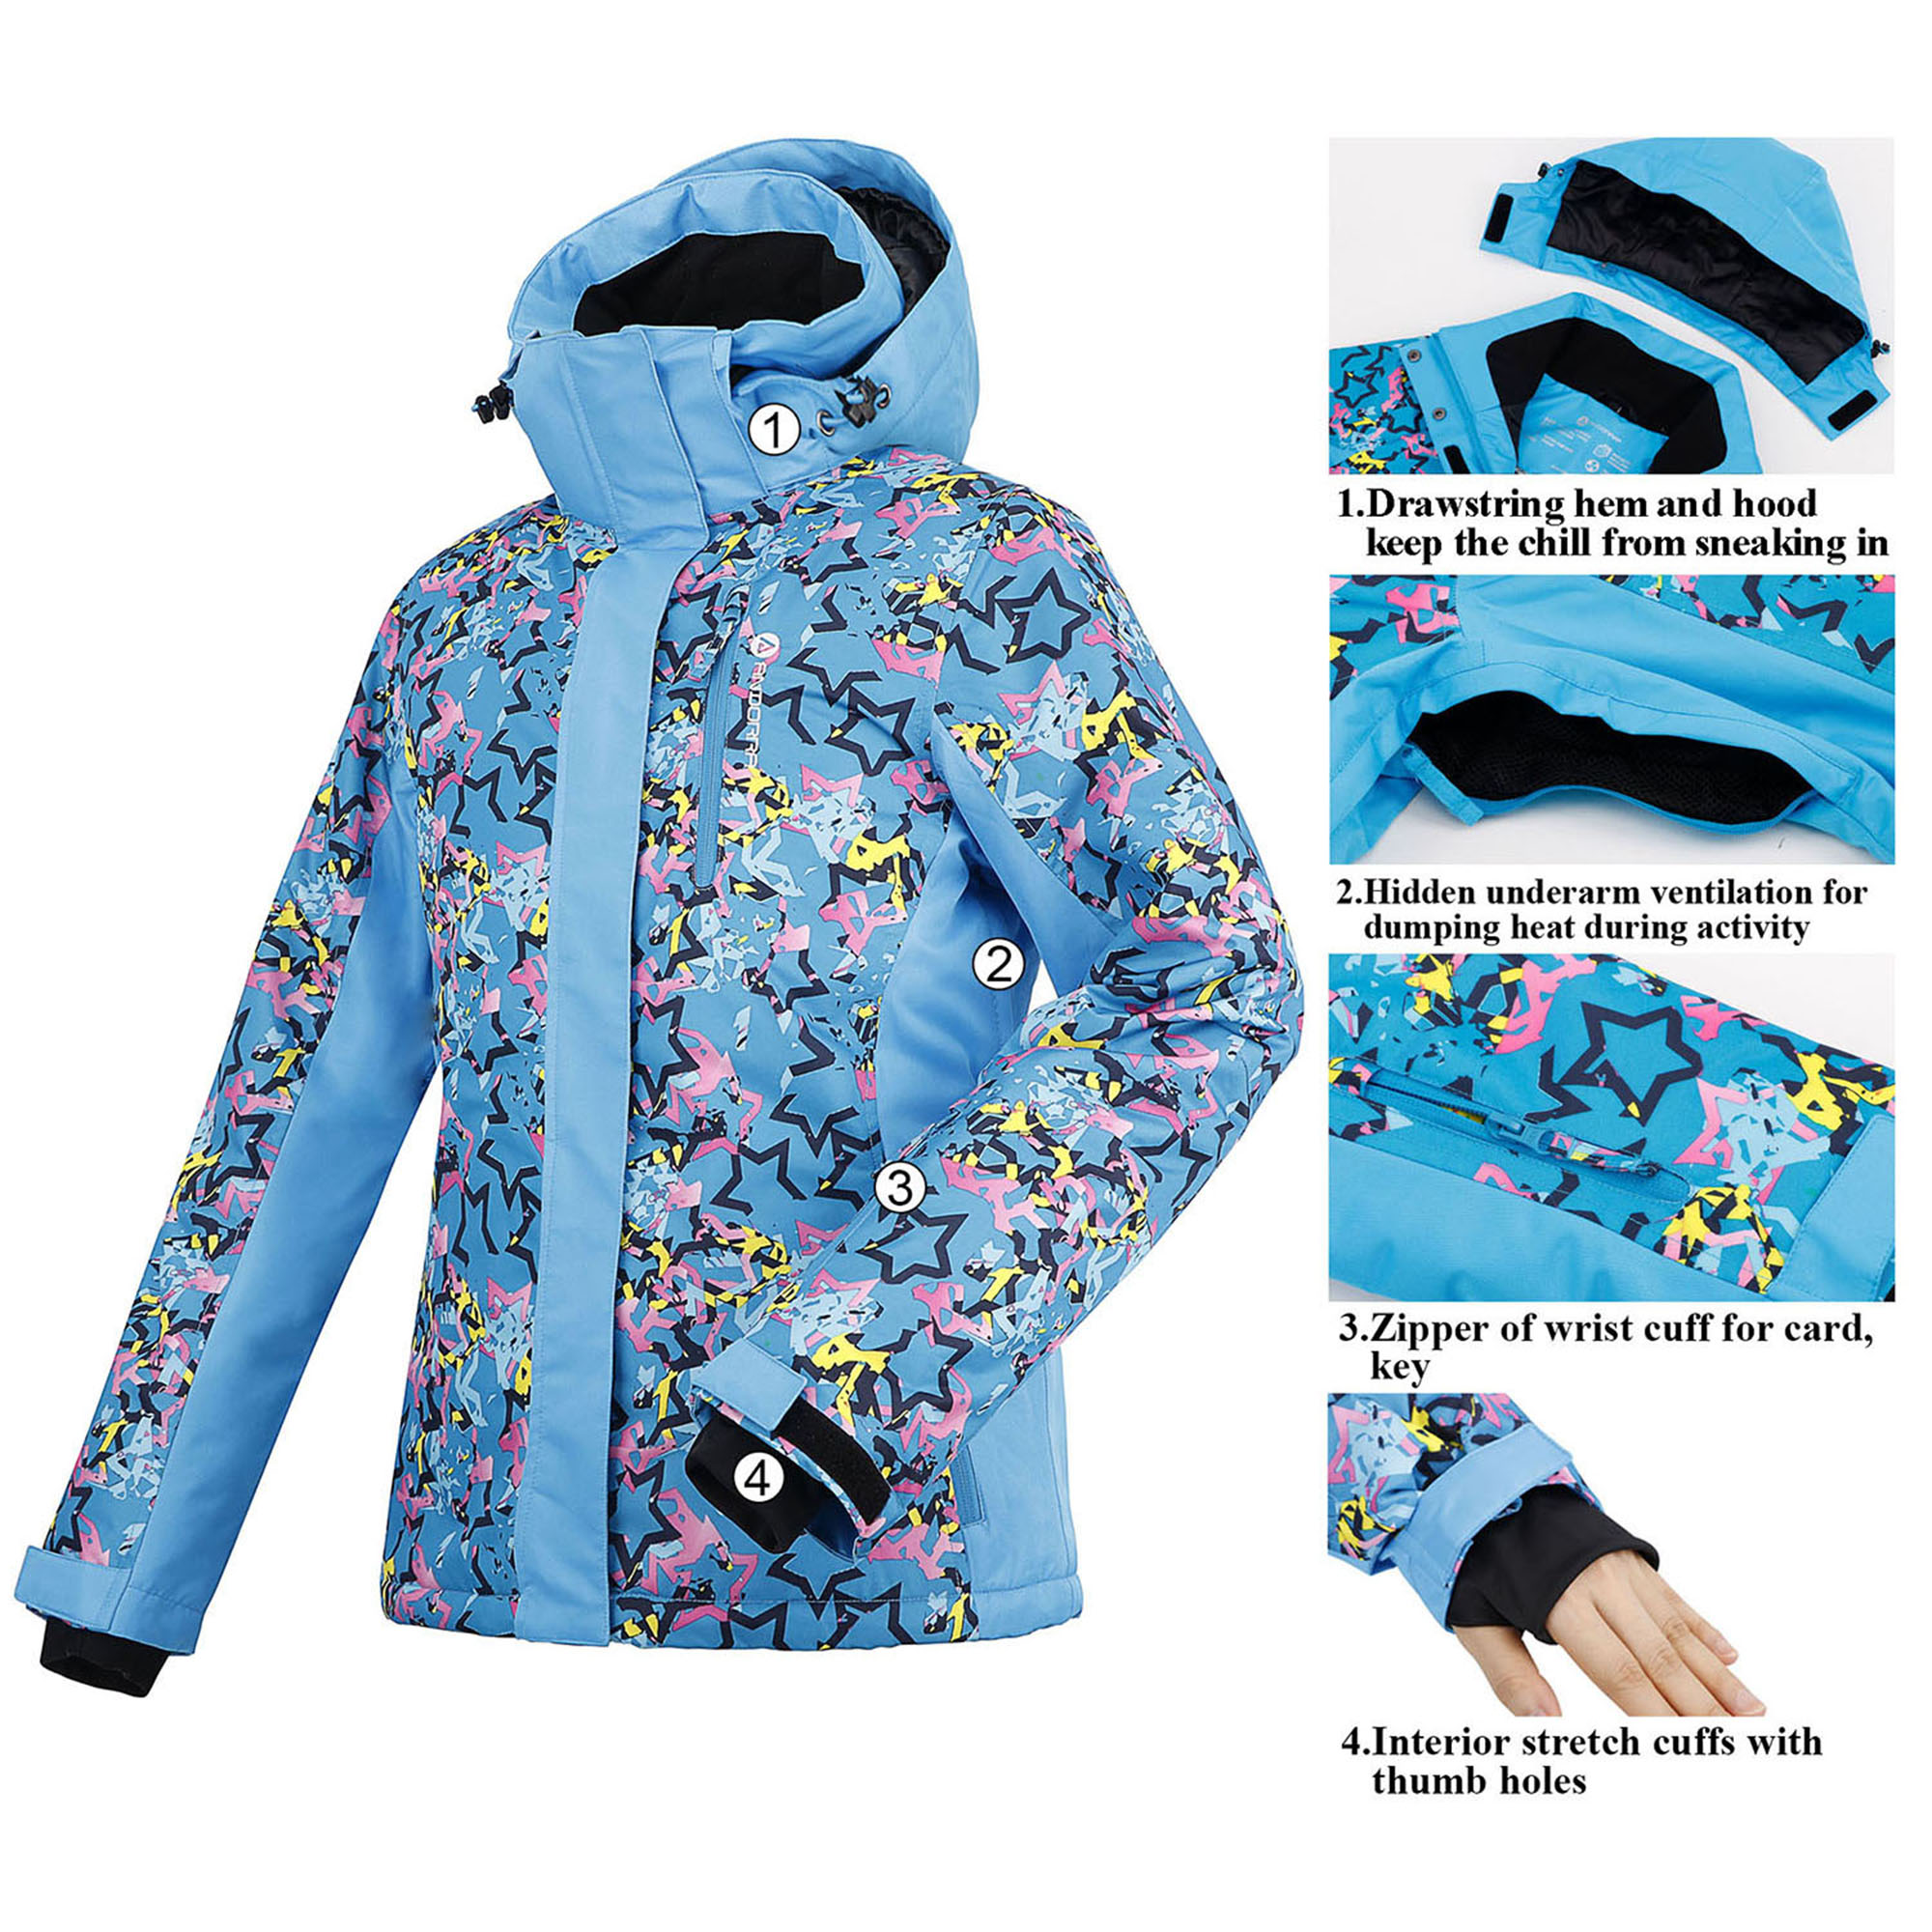 Simplicity Women's Winter Ski Jacket with Zip-Off Hood,Retro Blue Starbursts,M - image 3 of 4